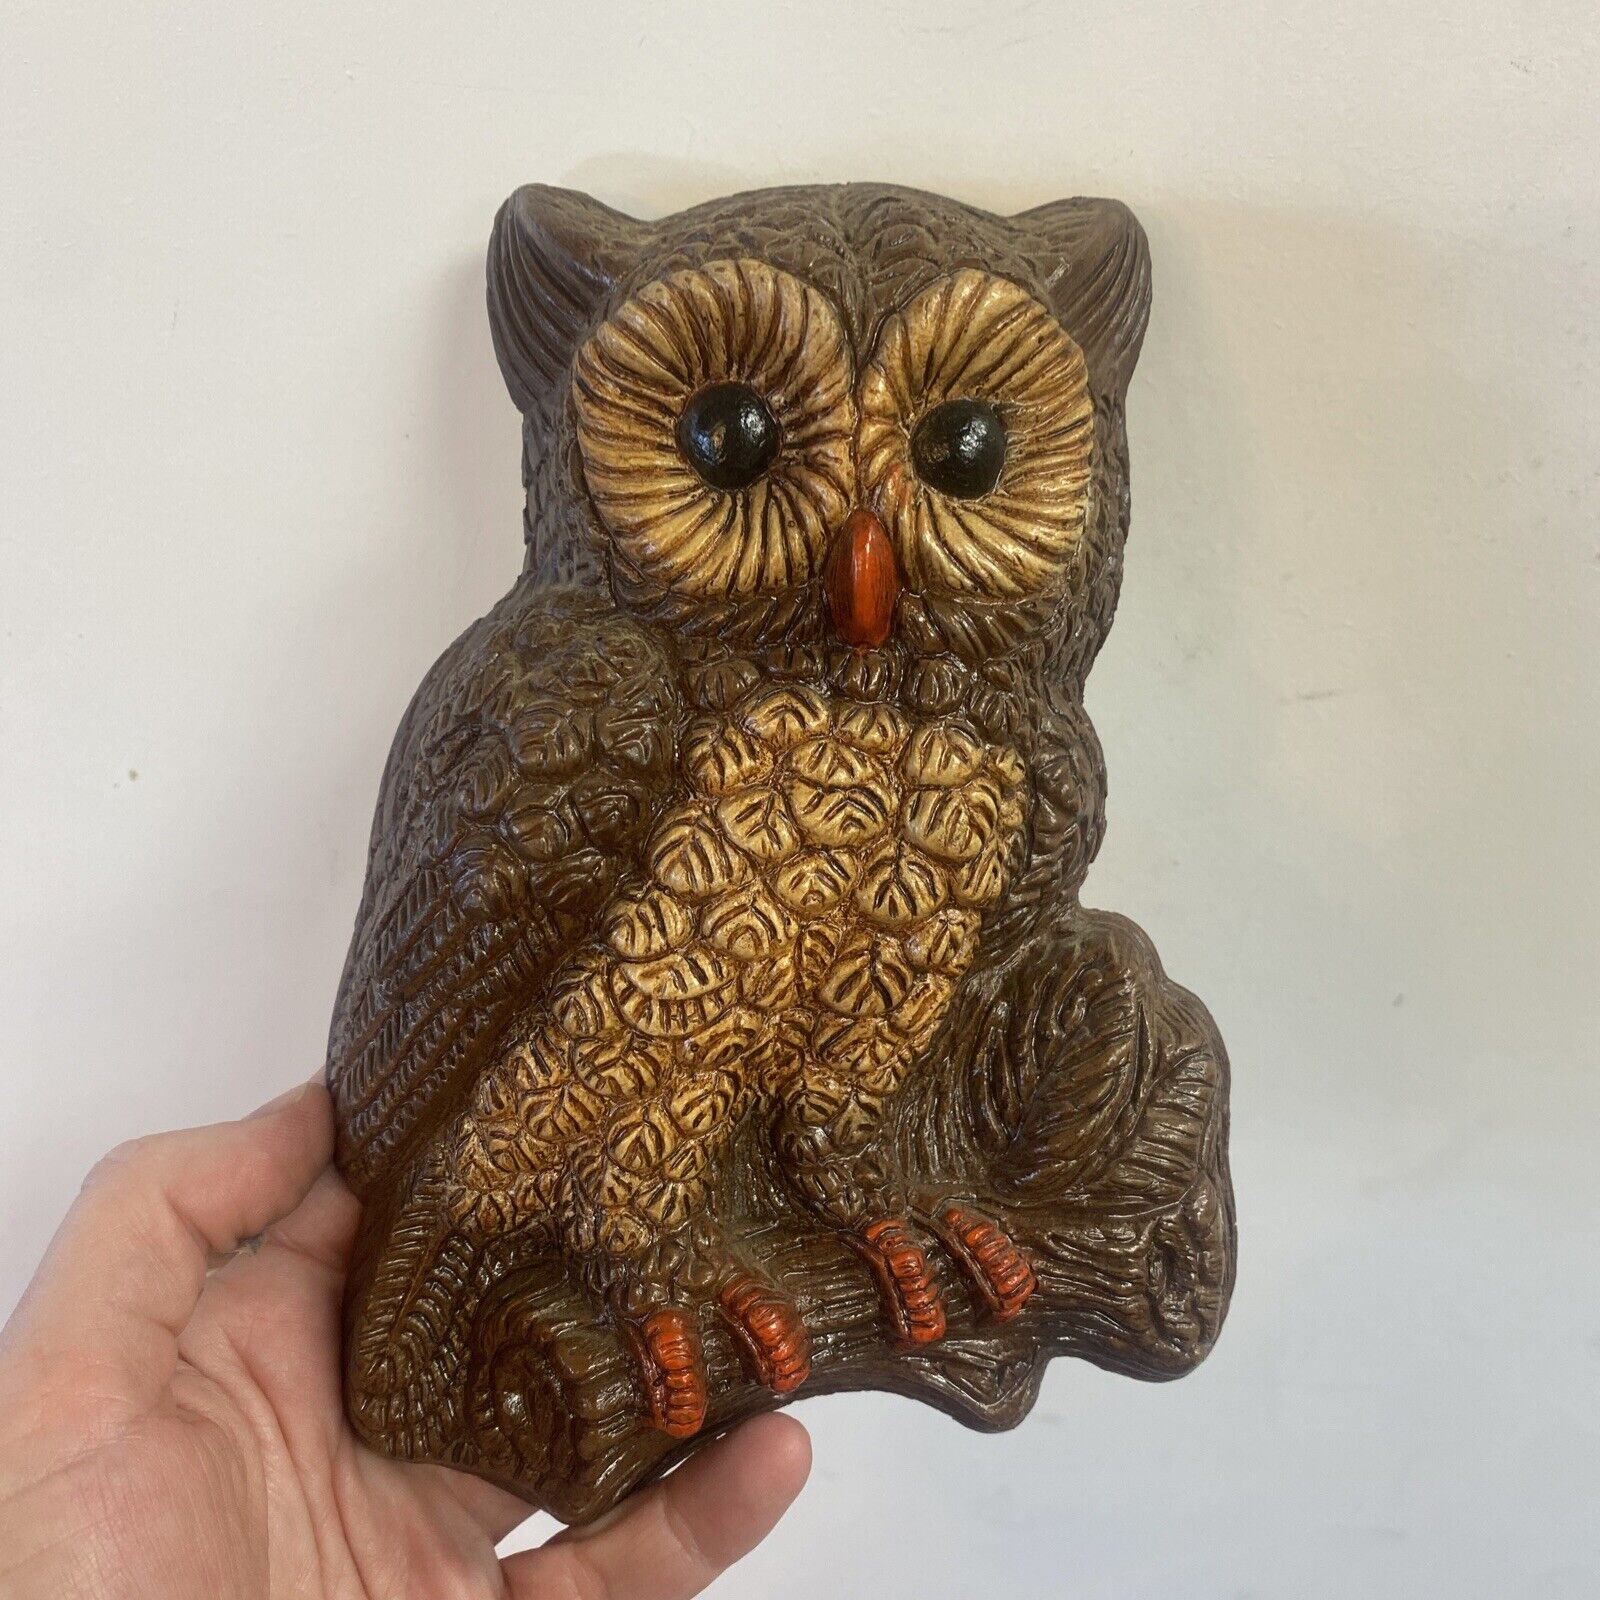 Vintage Owl Wall Hanging Art Decor Owl 7”x5”(Foamcraft) Plaque